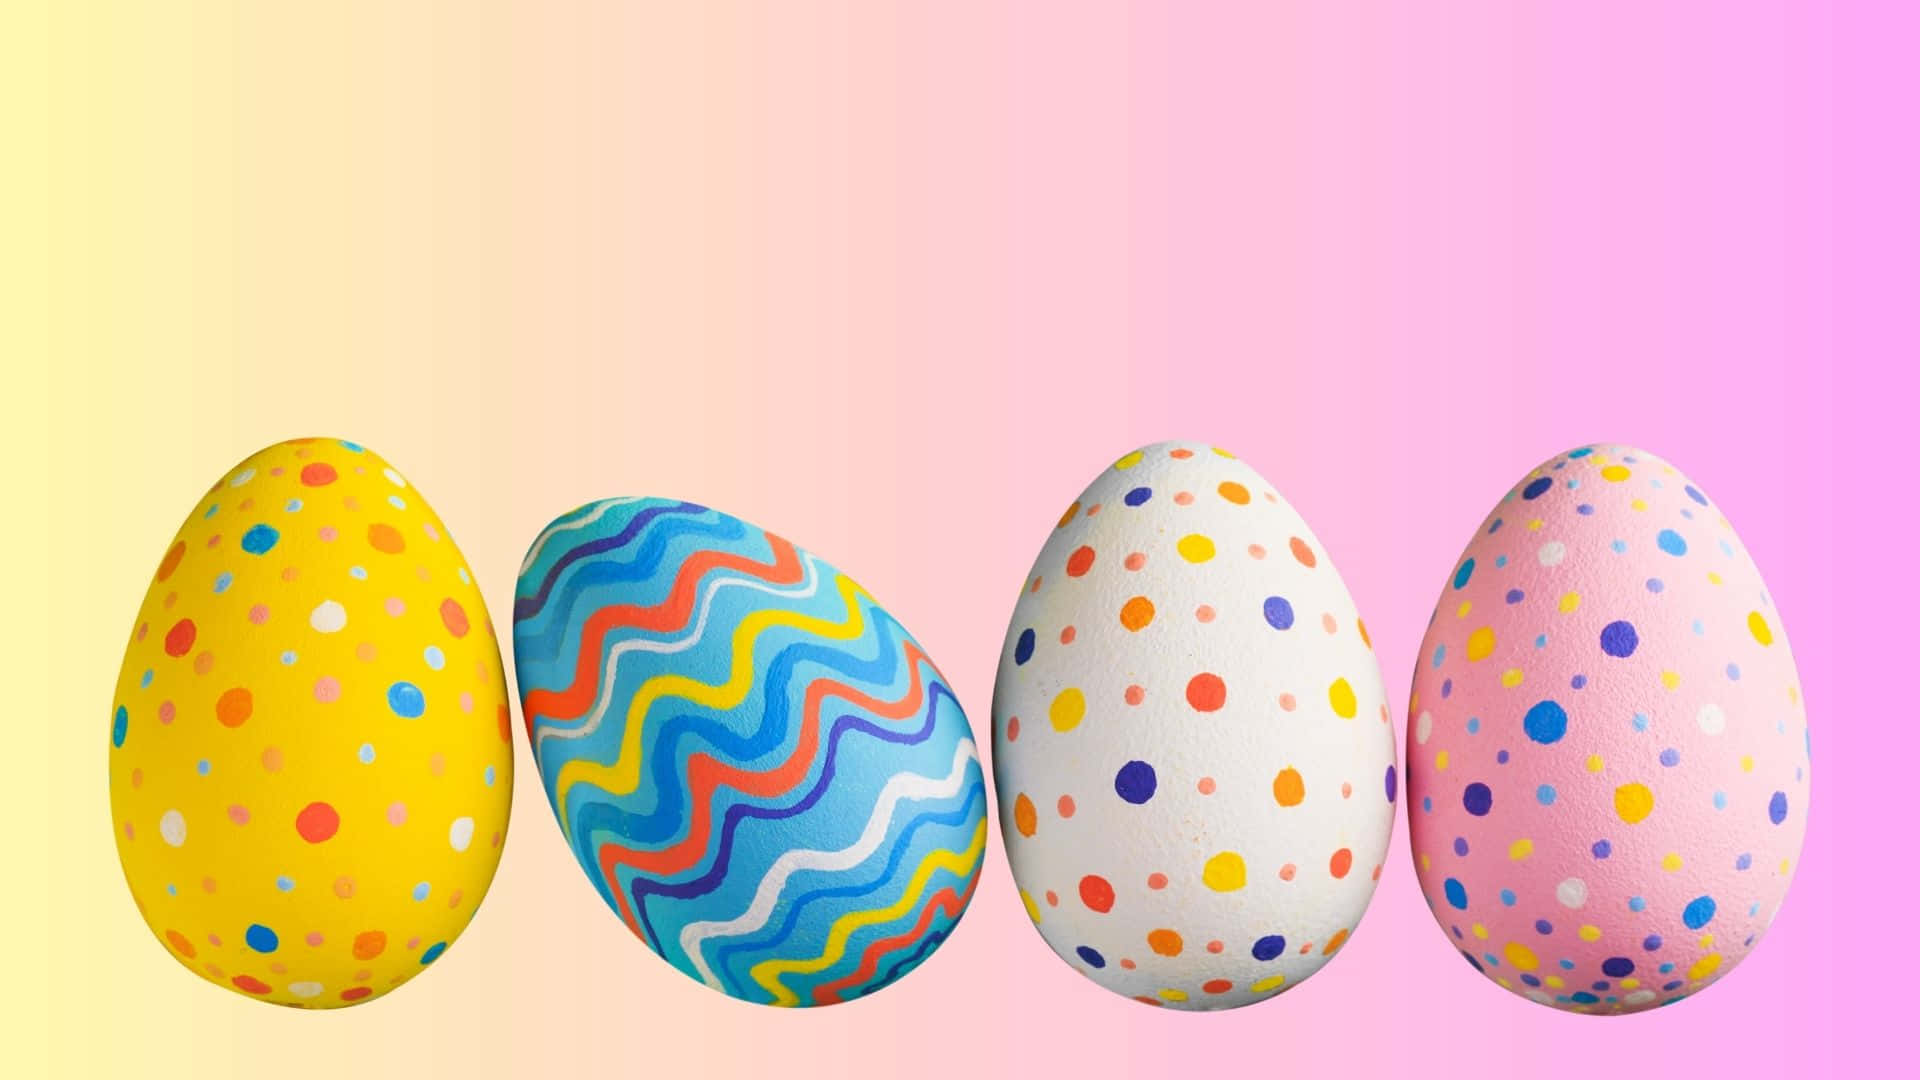 "A vibrant Easter egg showcasing the bursting colors of the spring season" Wallpaper